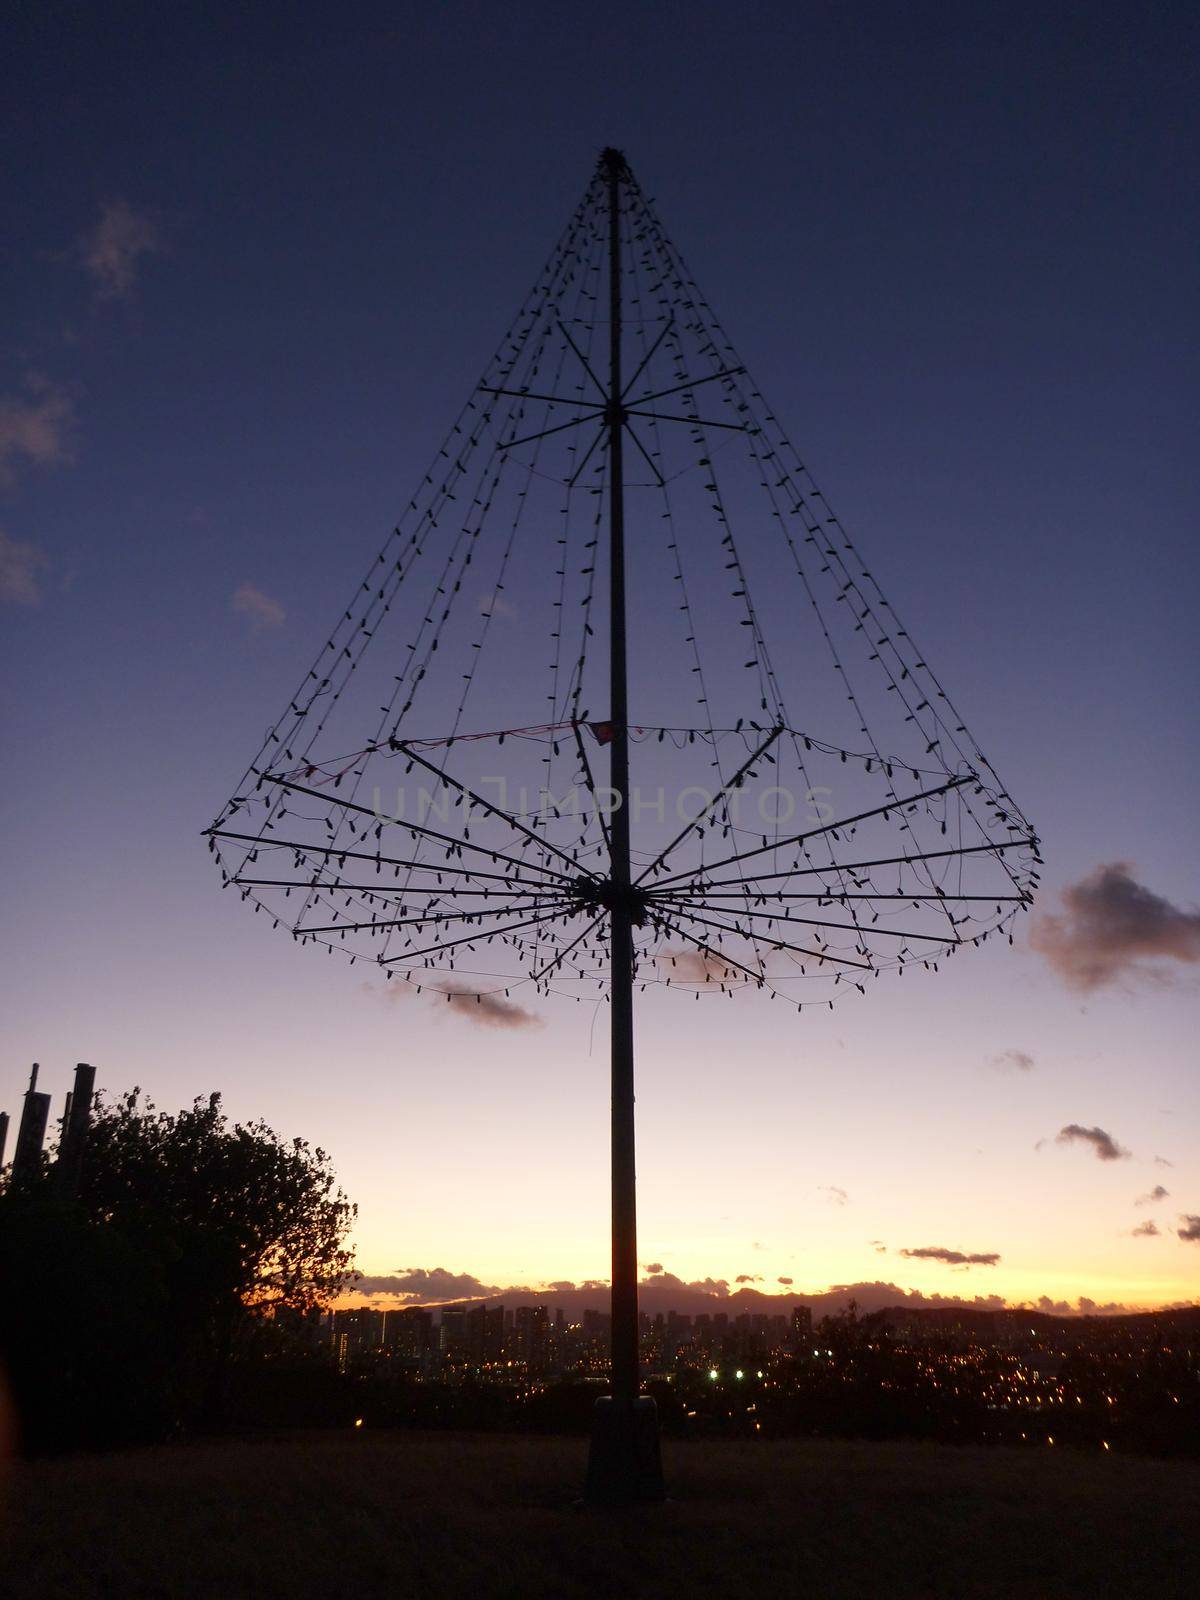  the Kaimuki Christmas tree (Metal Light Tree) on top Pu'u O Kaimuki (also known as Menehune Hill) at dusk on with cityscape of Oahu, Hawaii.